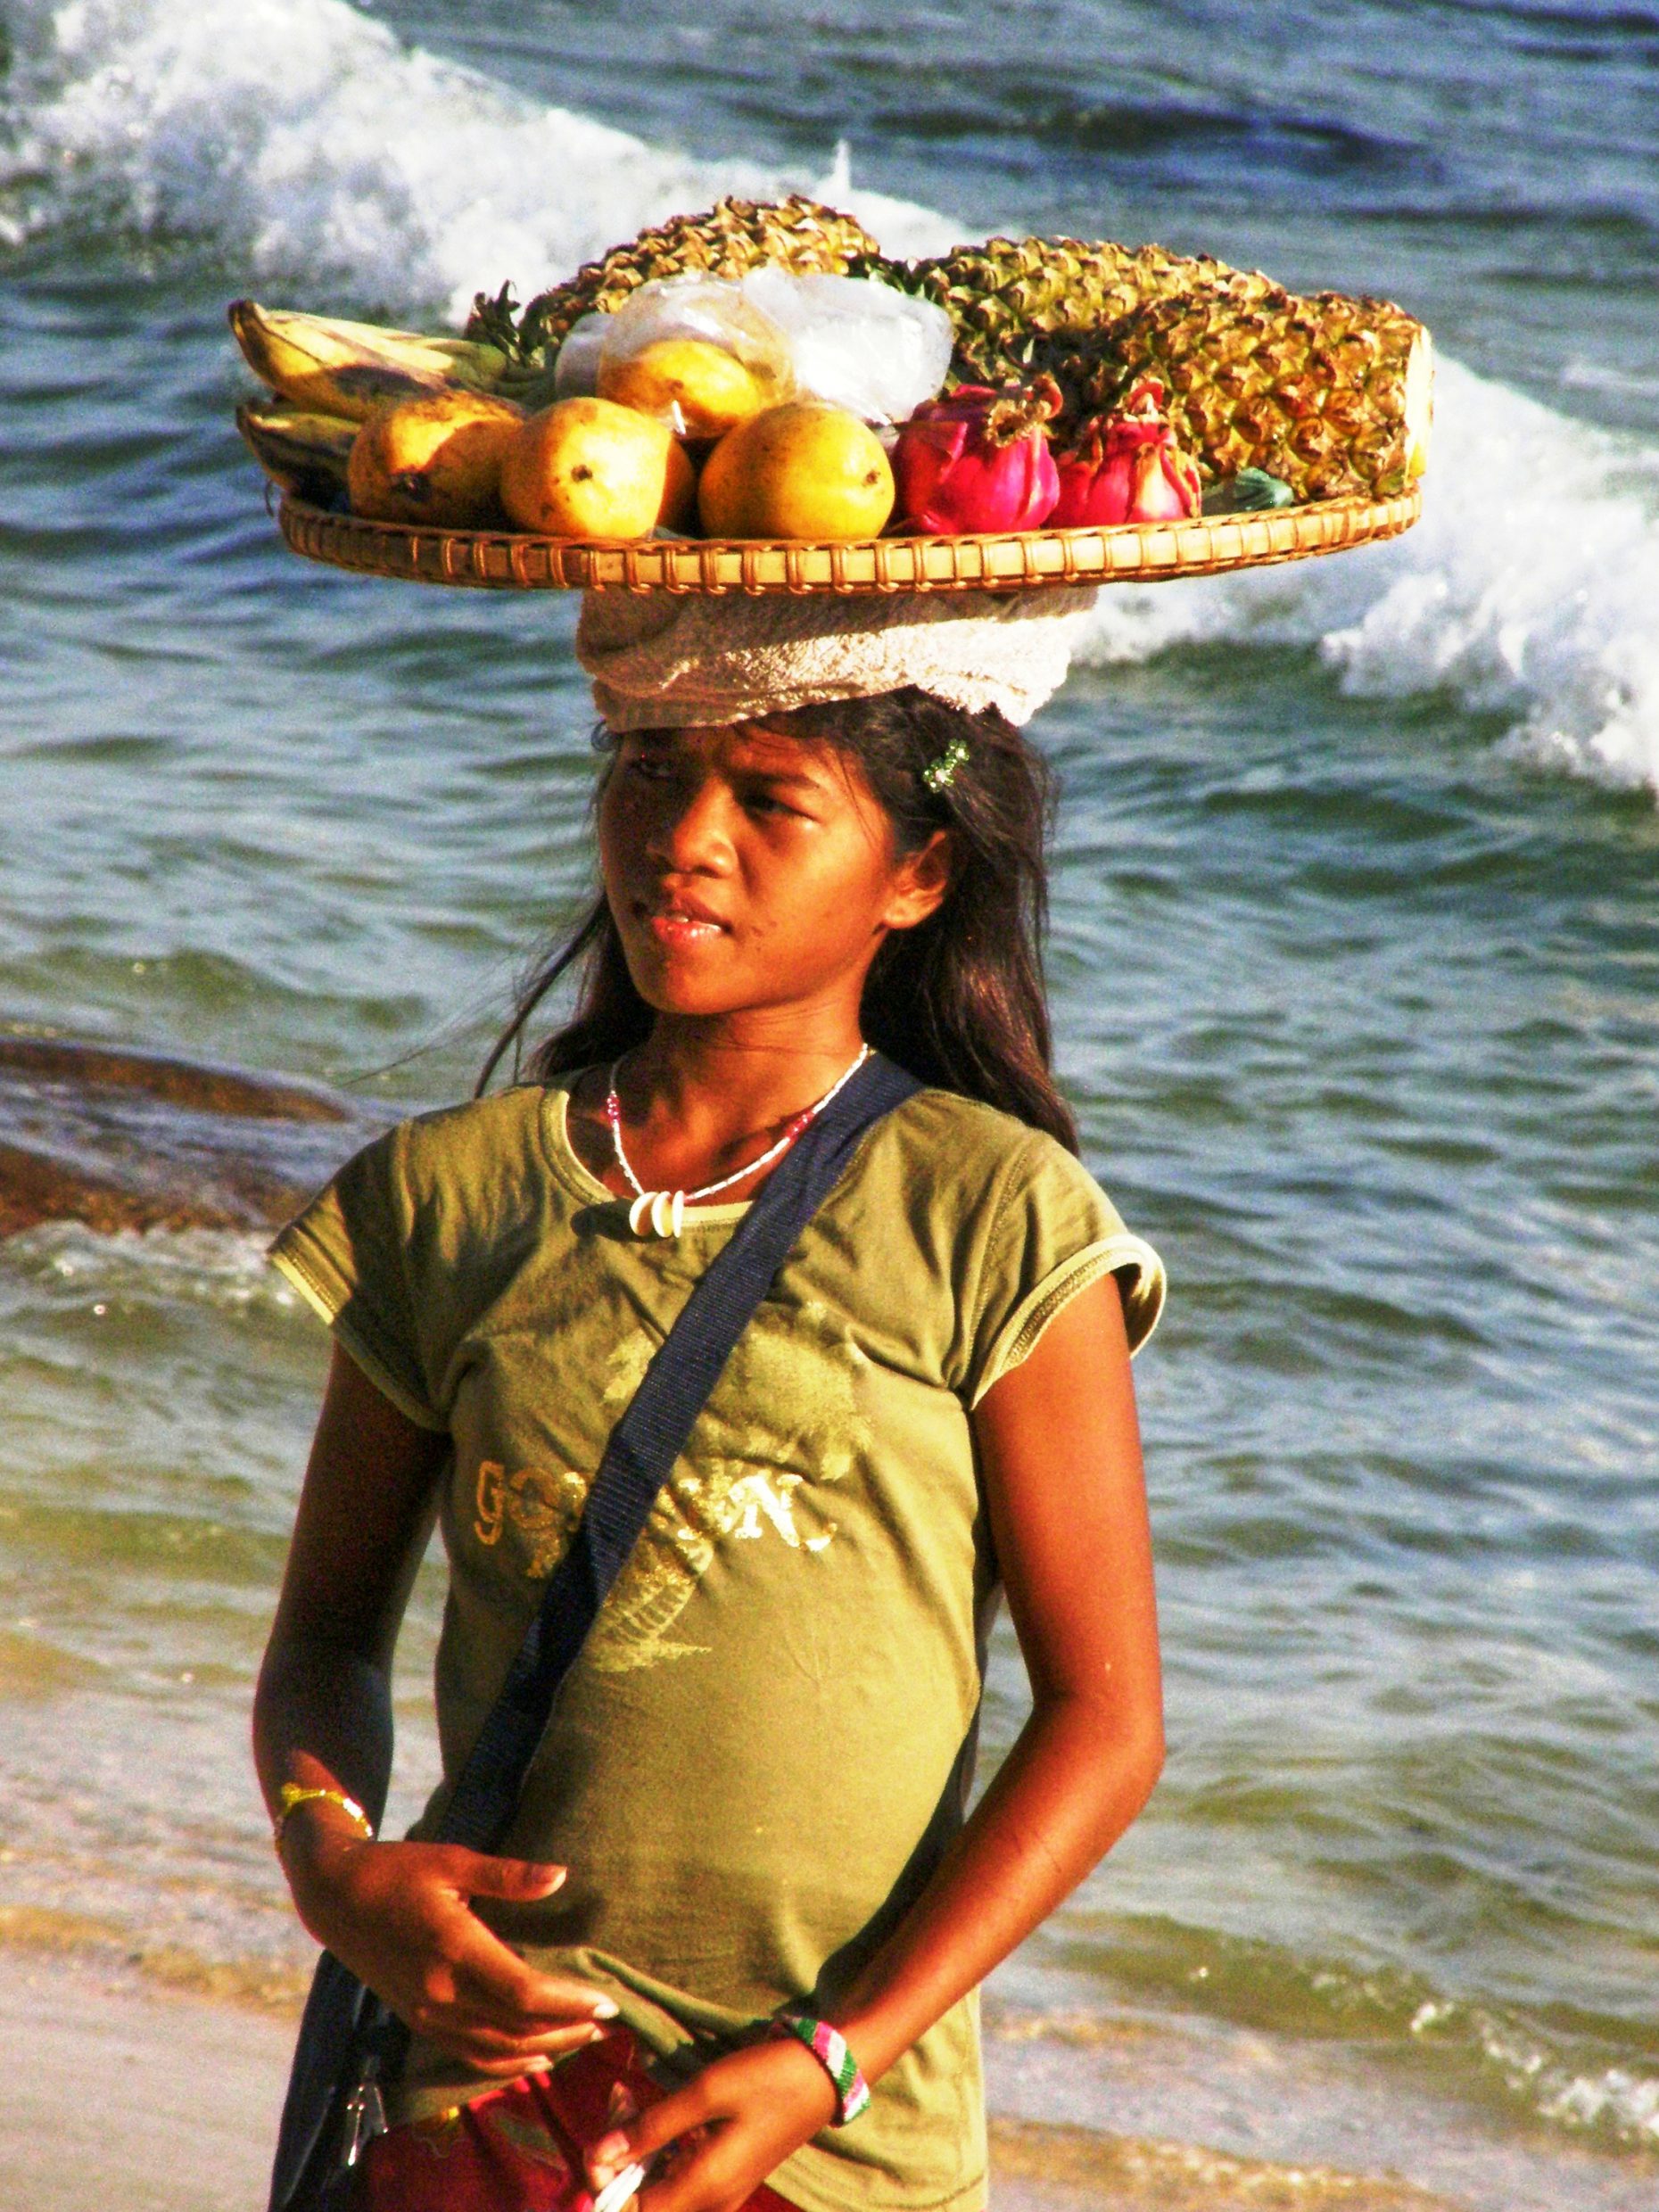 Fruit selling beach lady